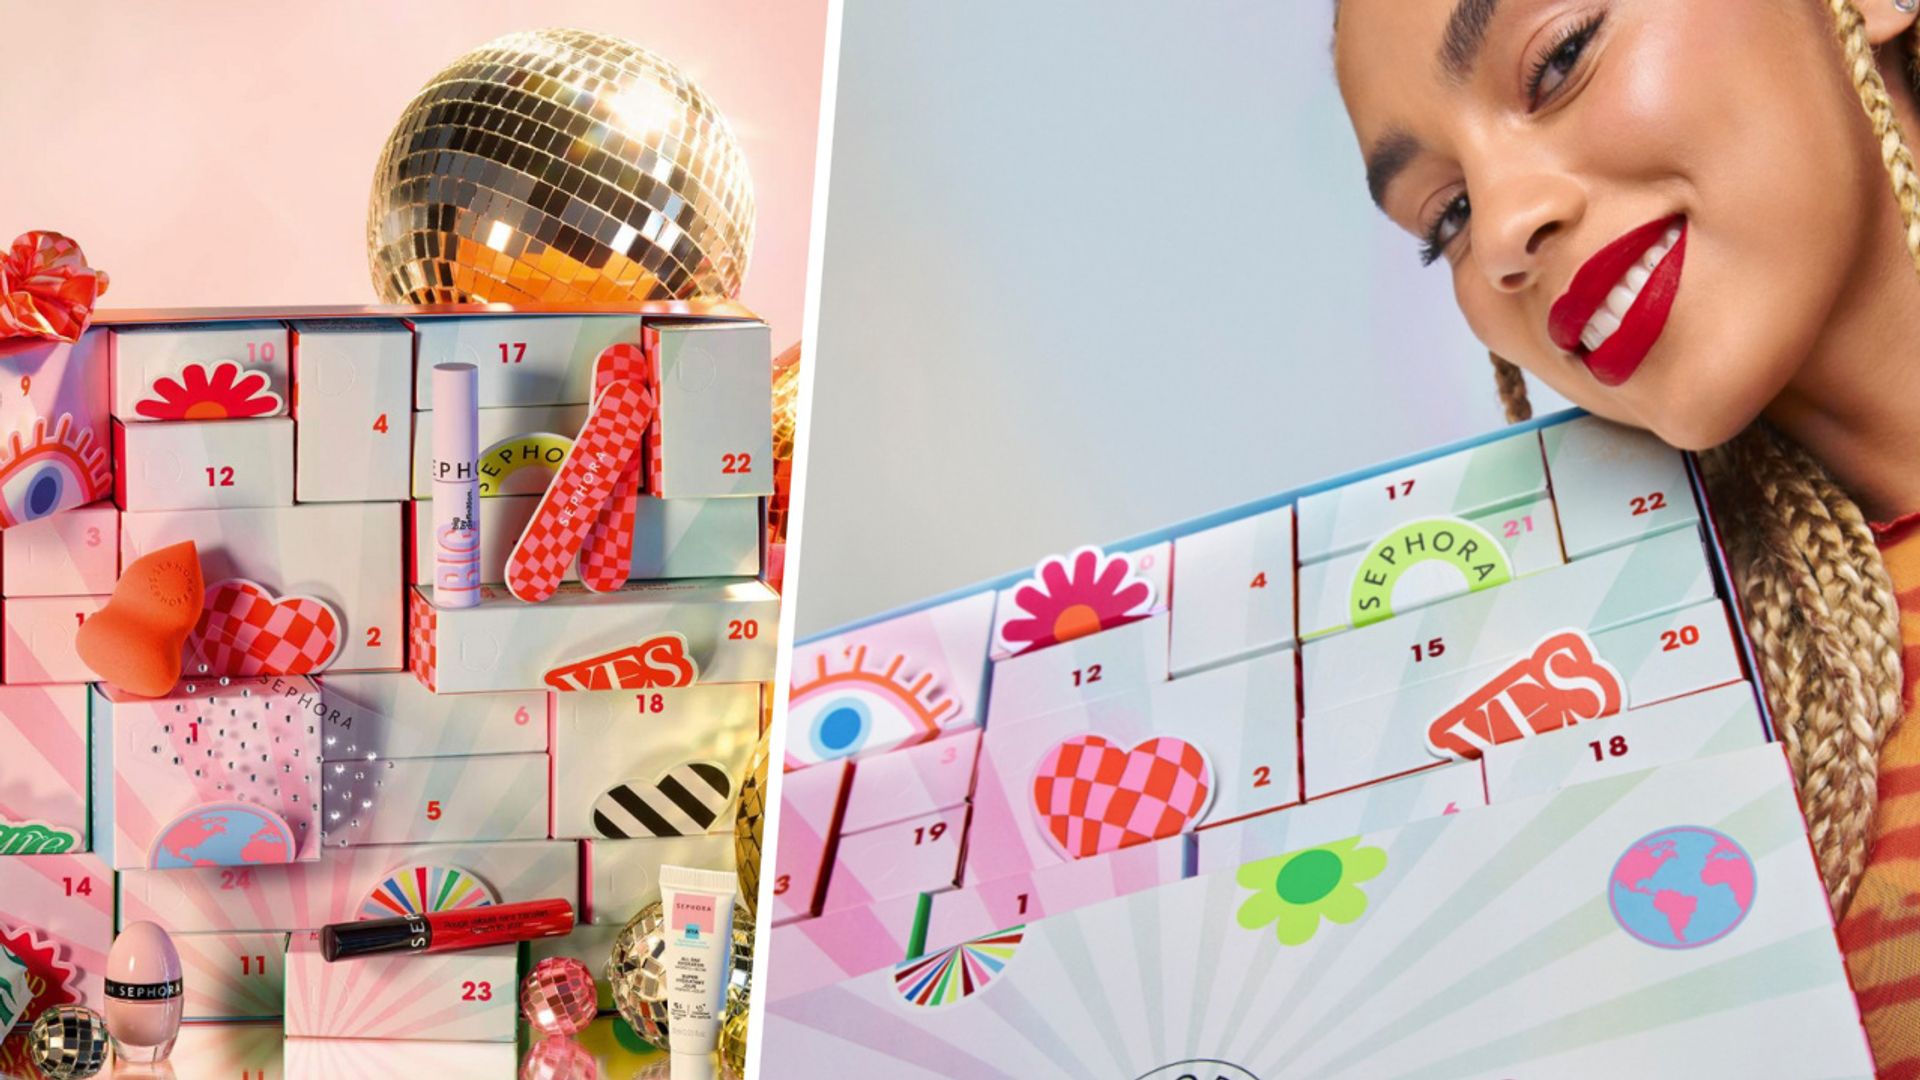 Sephora's amazing $49 holiday advent calendar has landed - take a peek inside